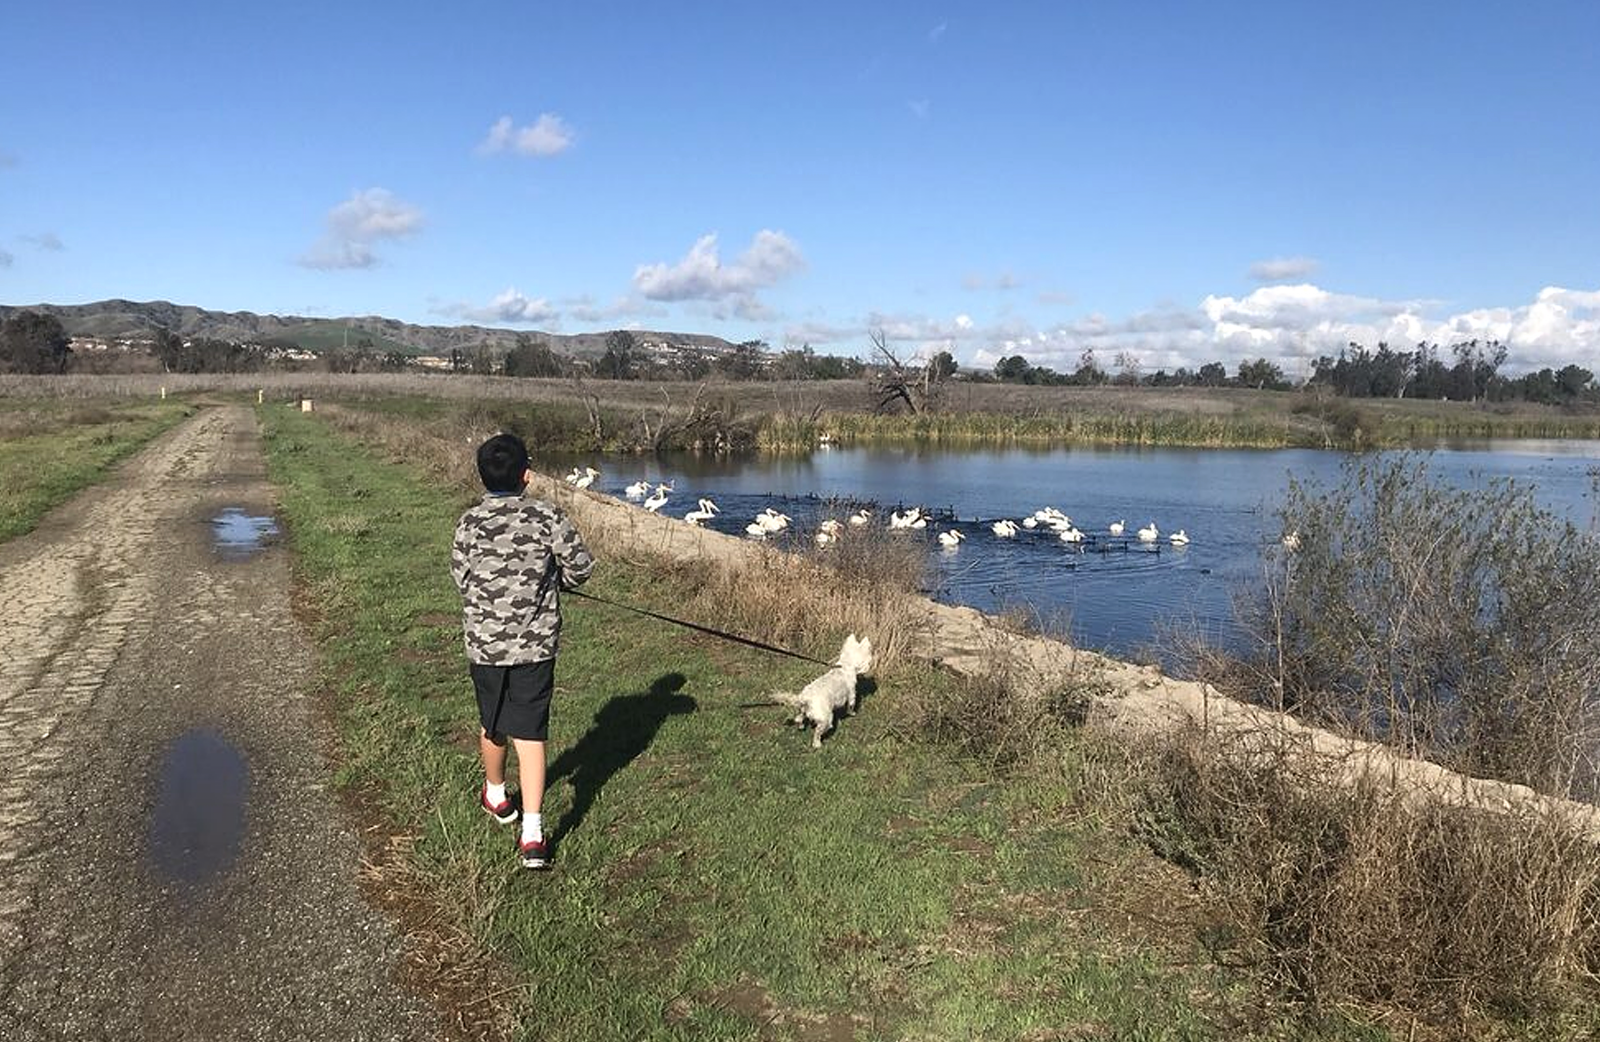 A young boy walks his dog past Prado lake with ducks.